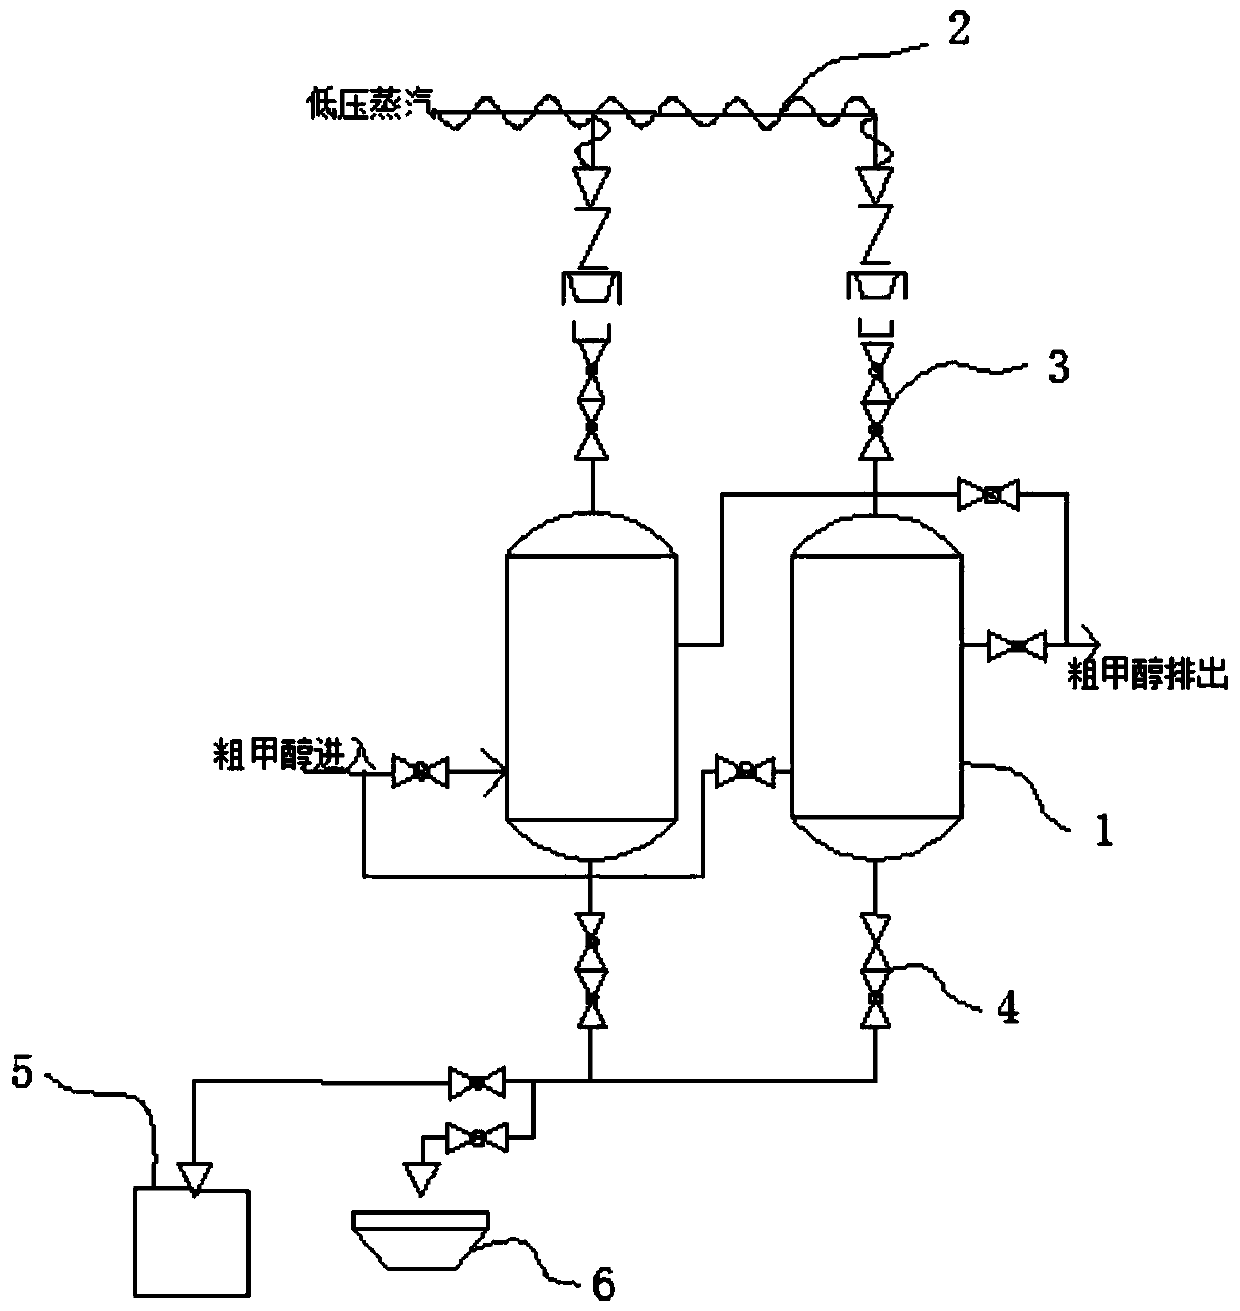 Online paraffin removal system of crude methanol filtration system